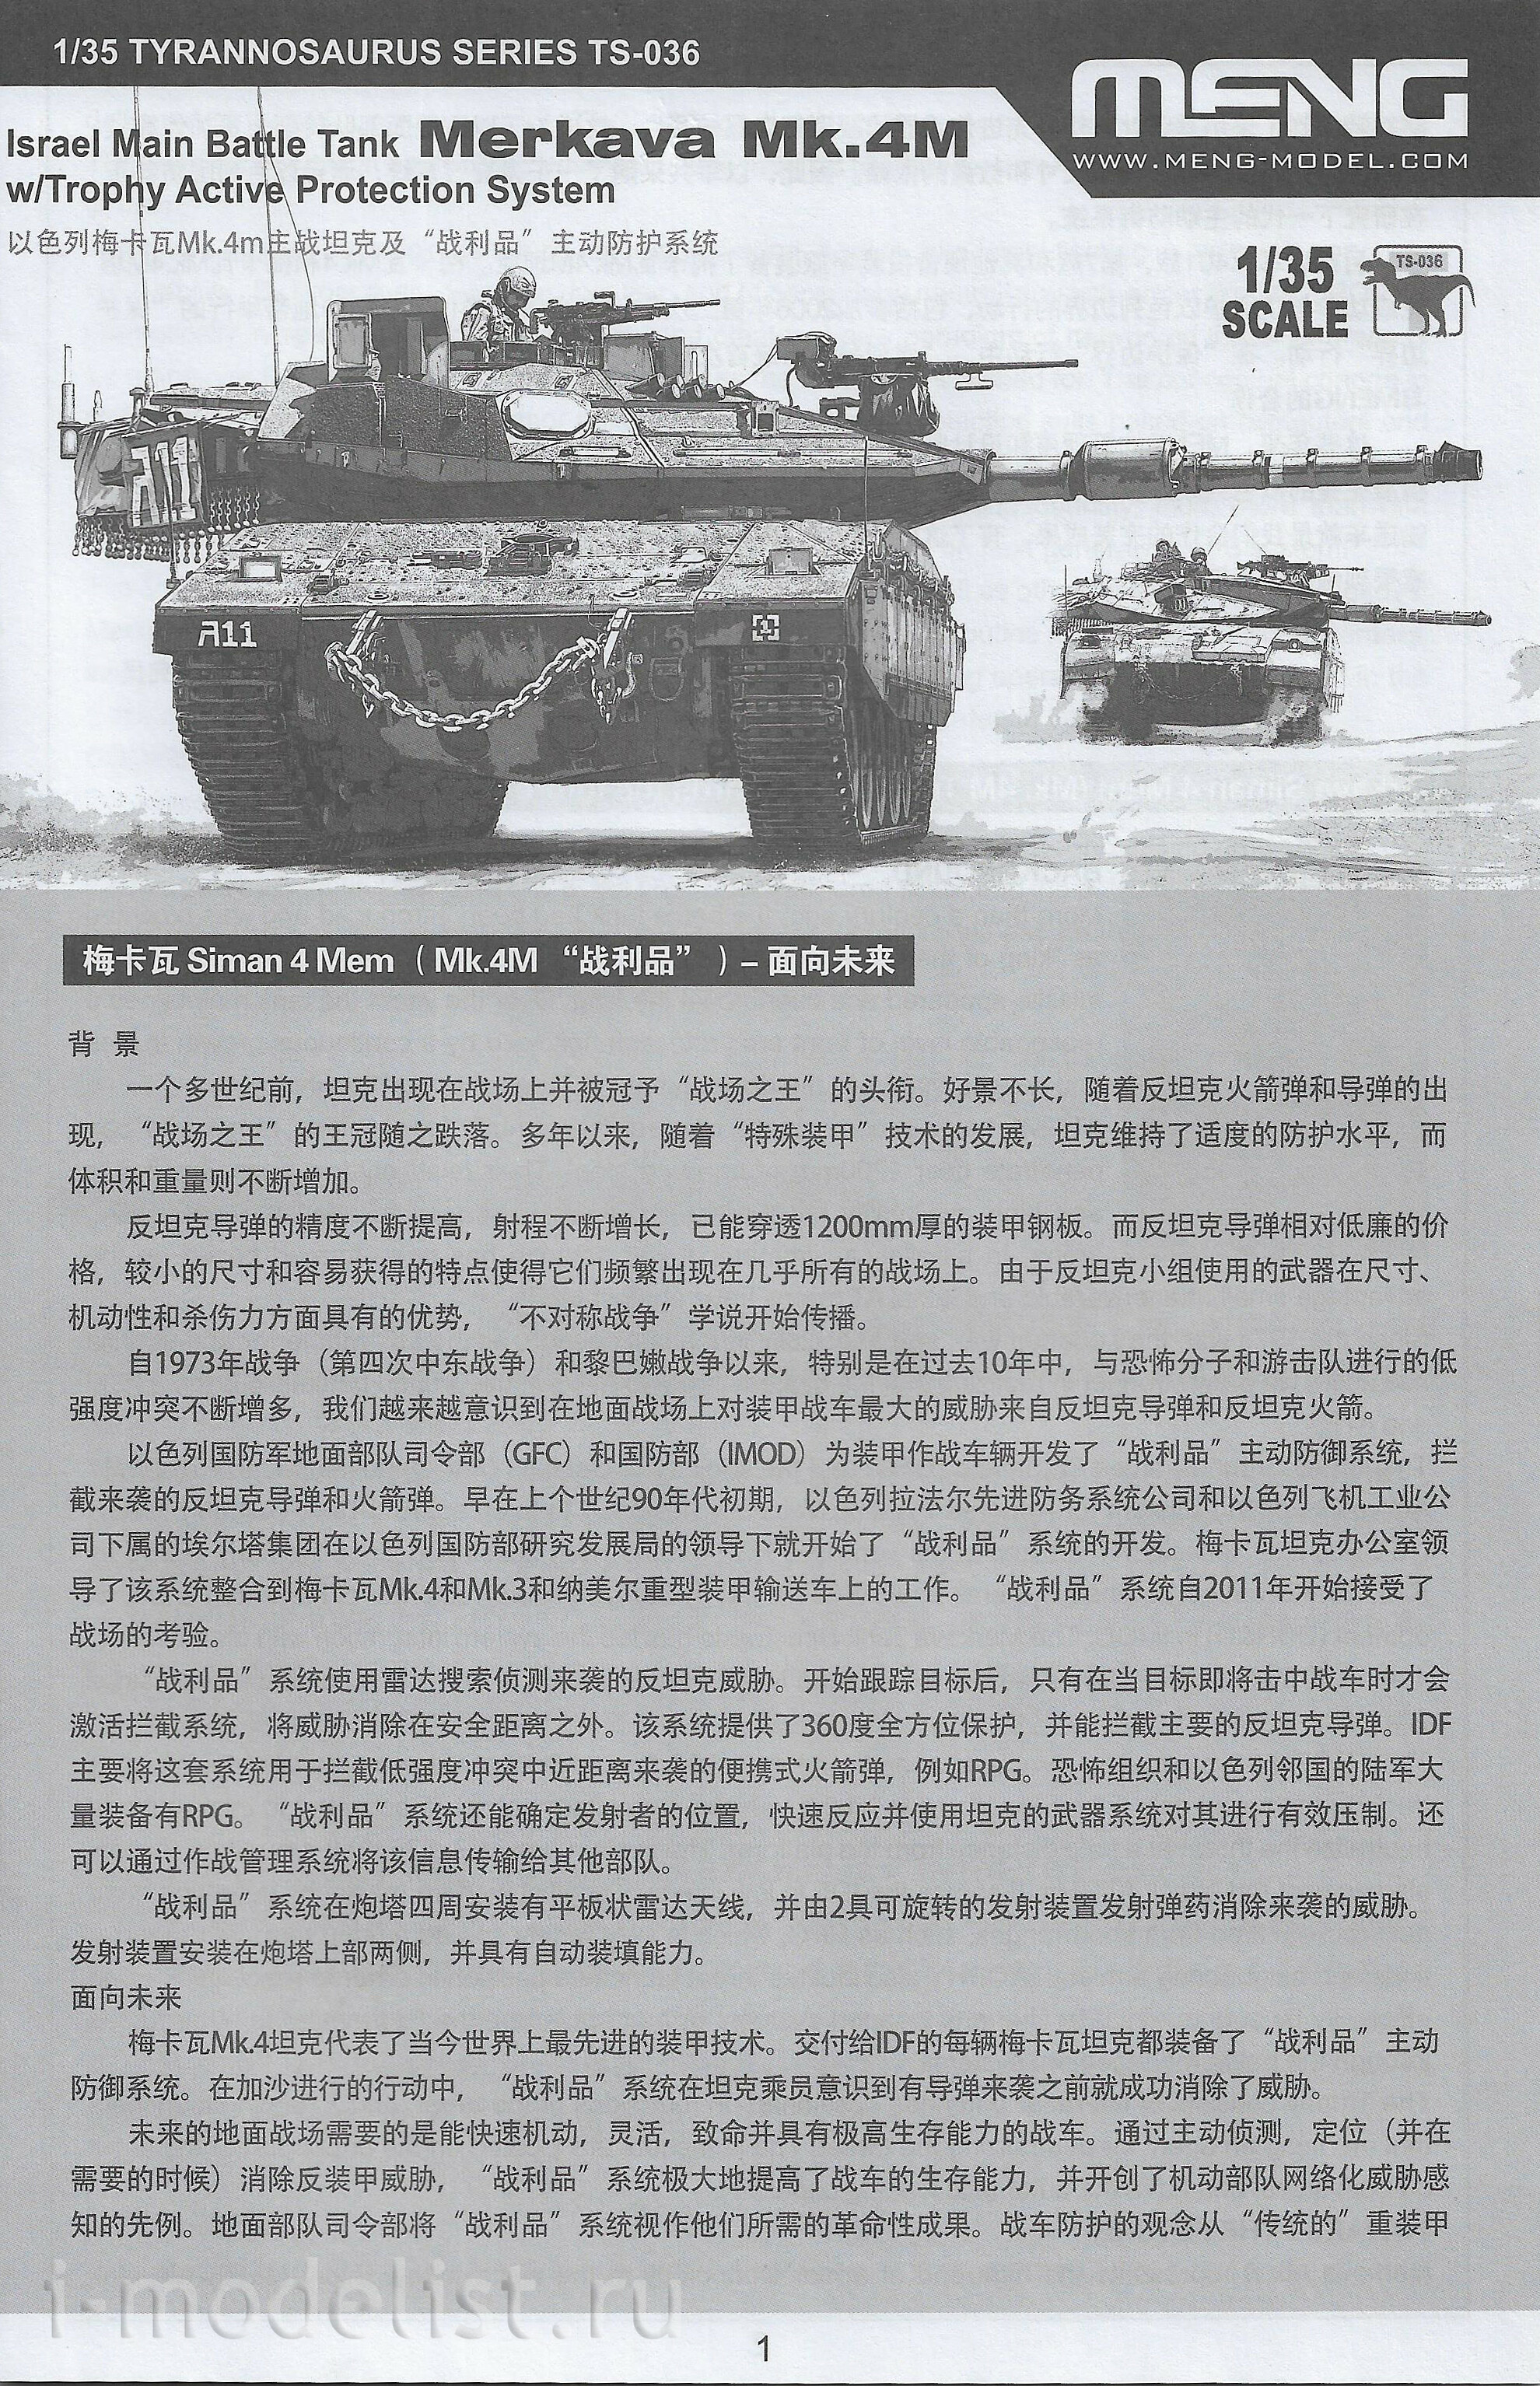 TS-036 Meng 1/35 Израильский танк Merkava Mk.4M с системой активной защиты Trophy